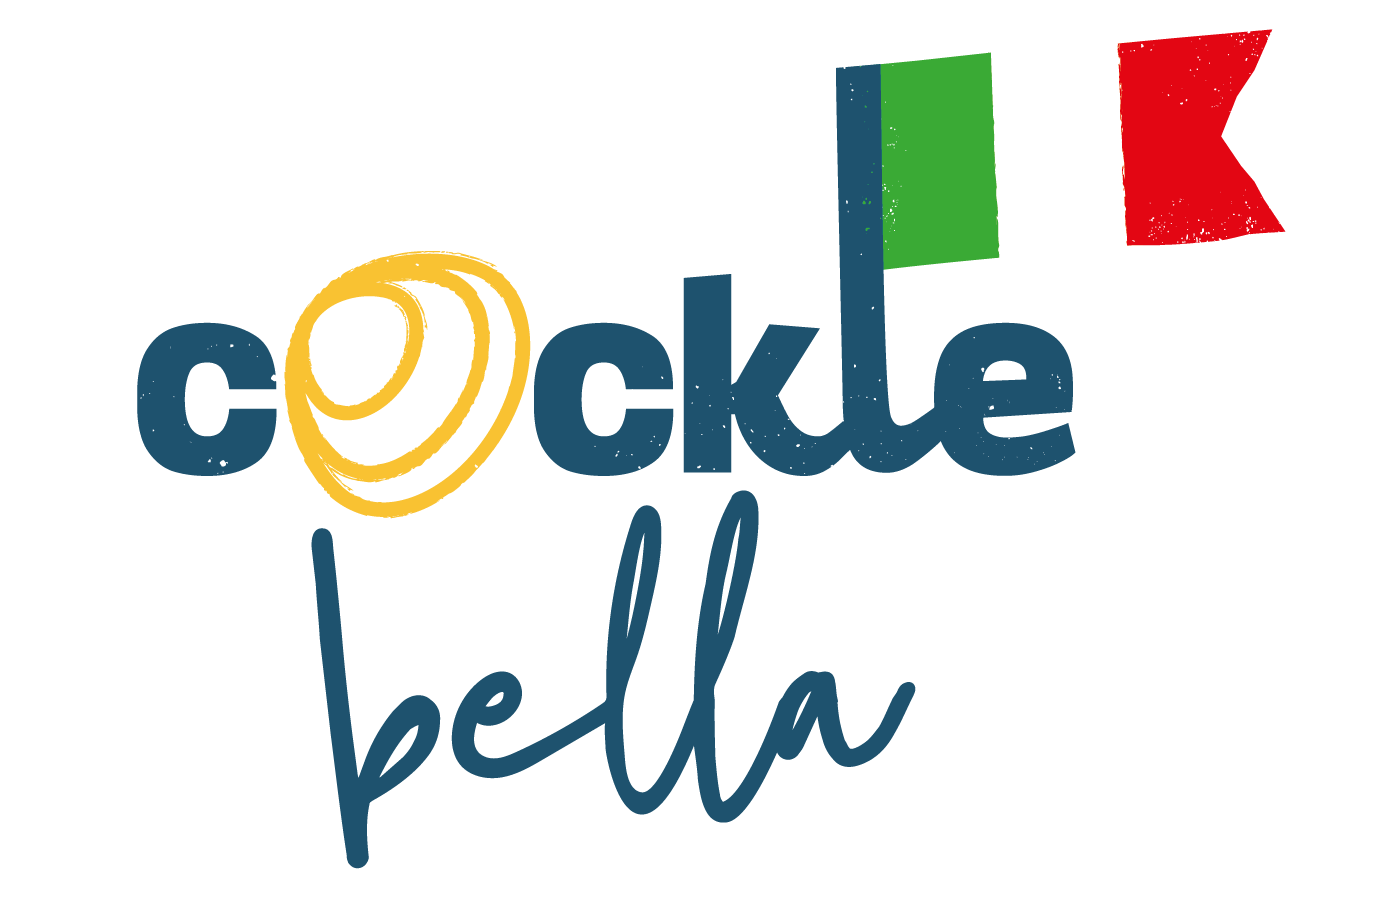 Cockle Bella